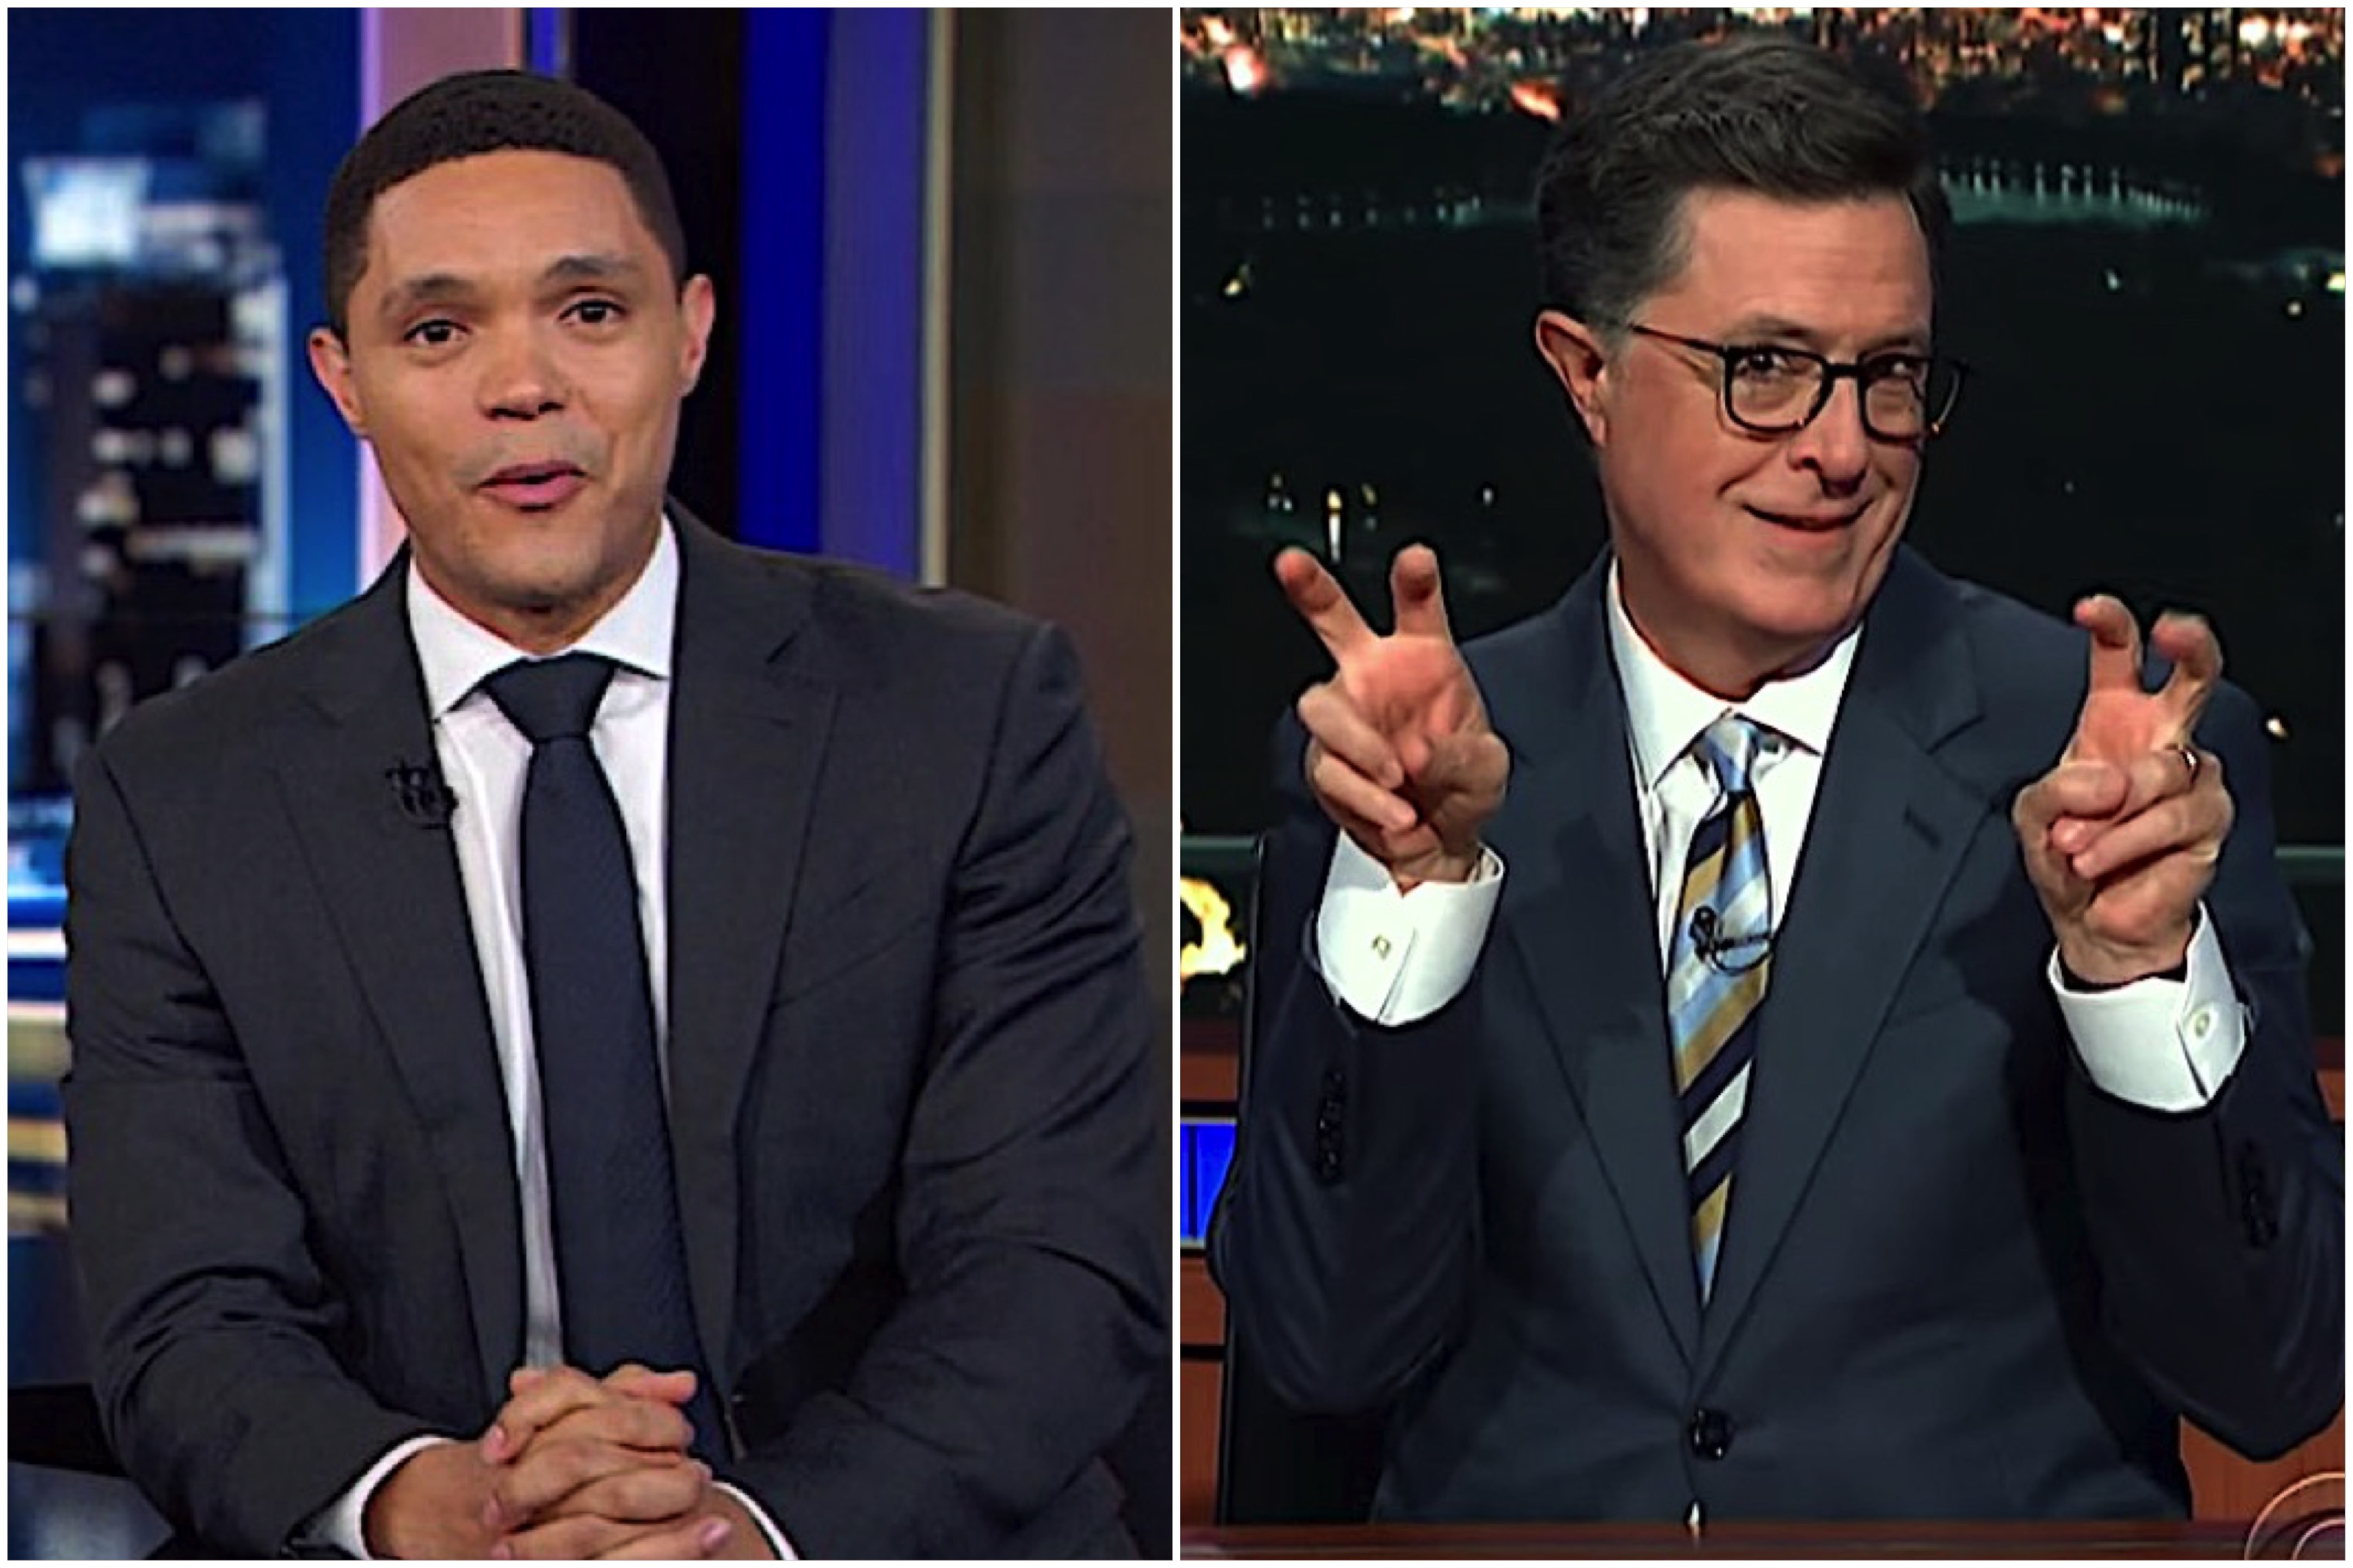 Trevor Noah and Stephen Colbert mock Jared Kushner